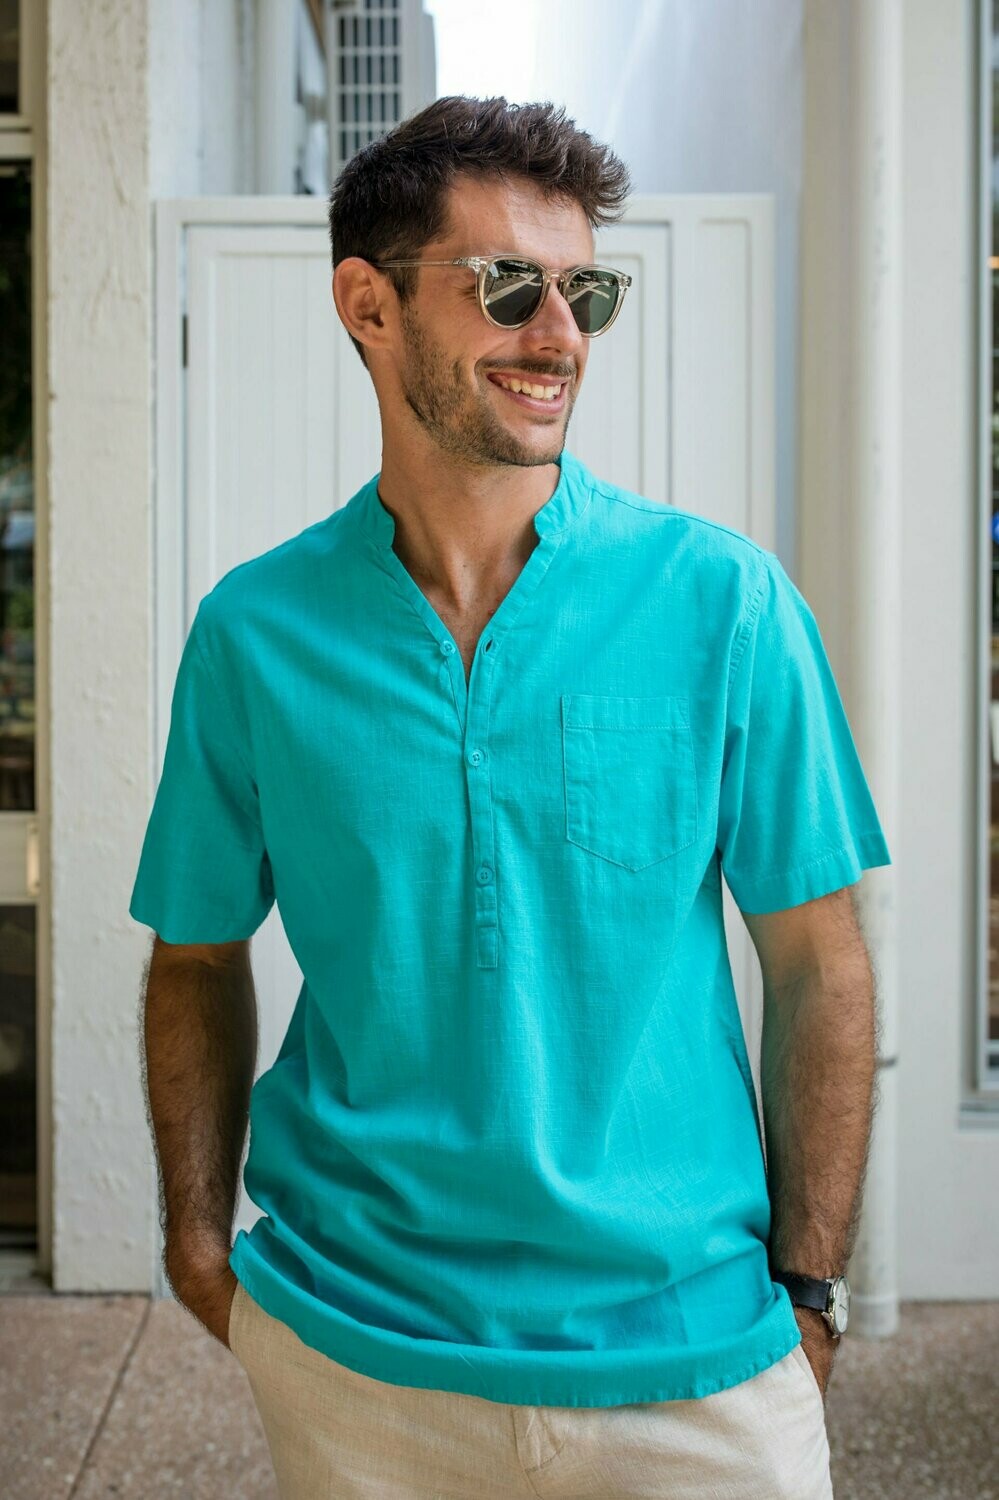 Short Sleeve Shirt 3/button crew neck. Turquoise